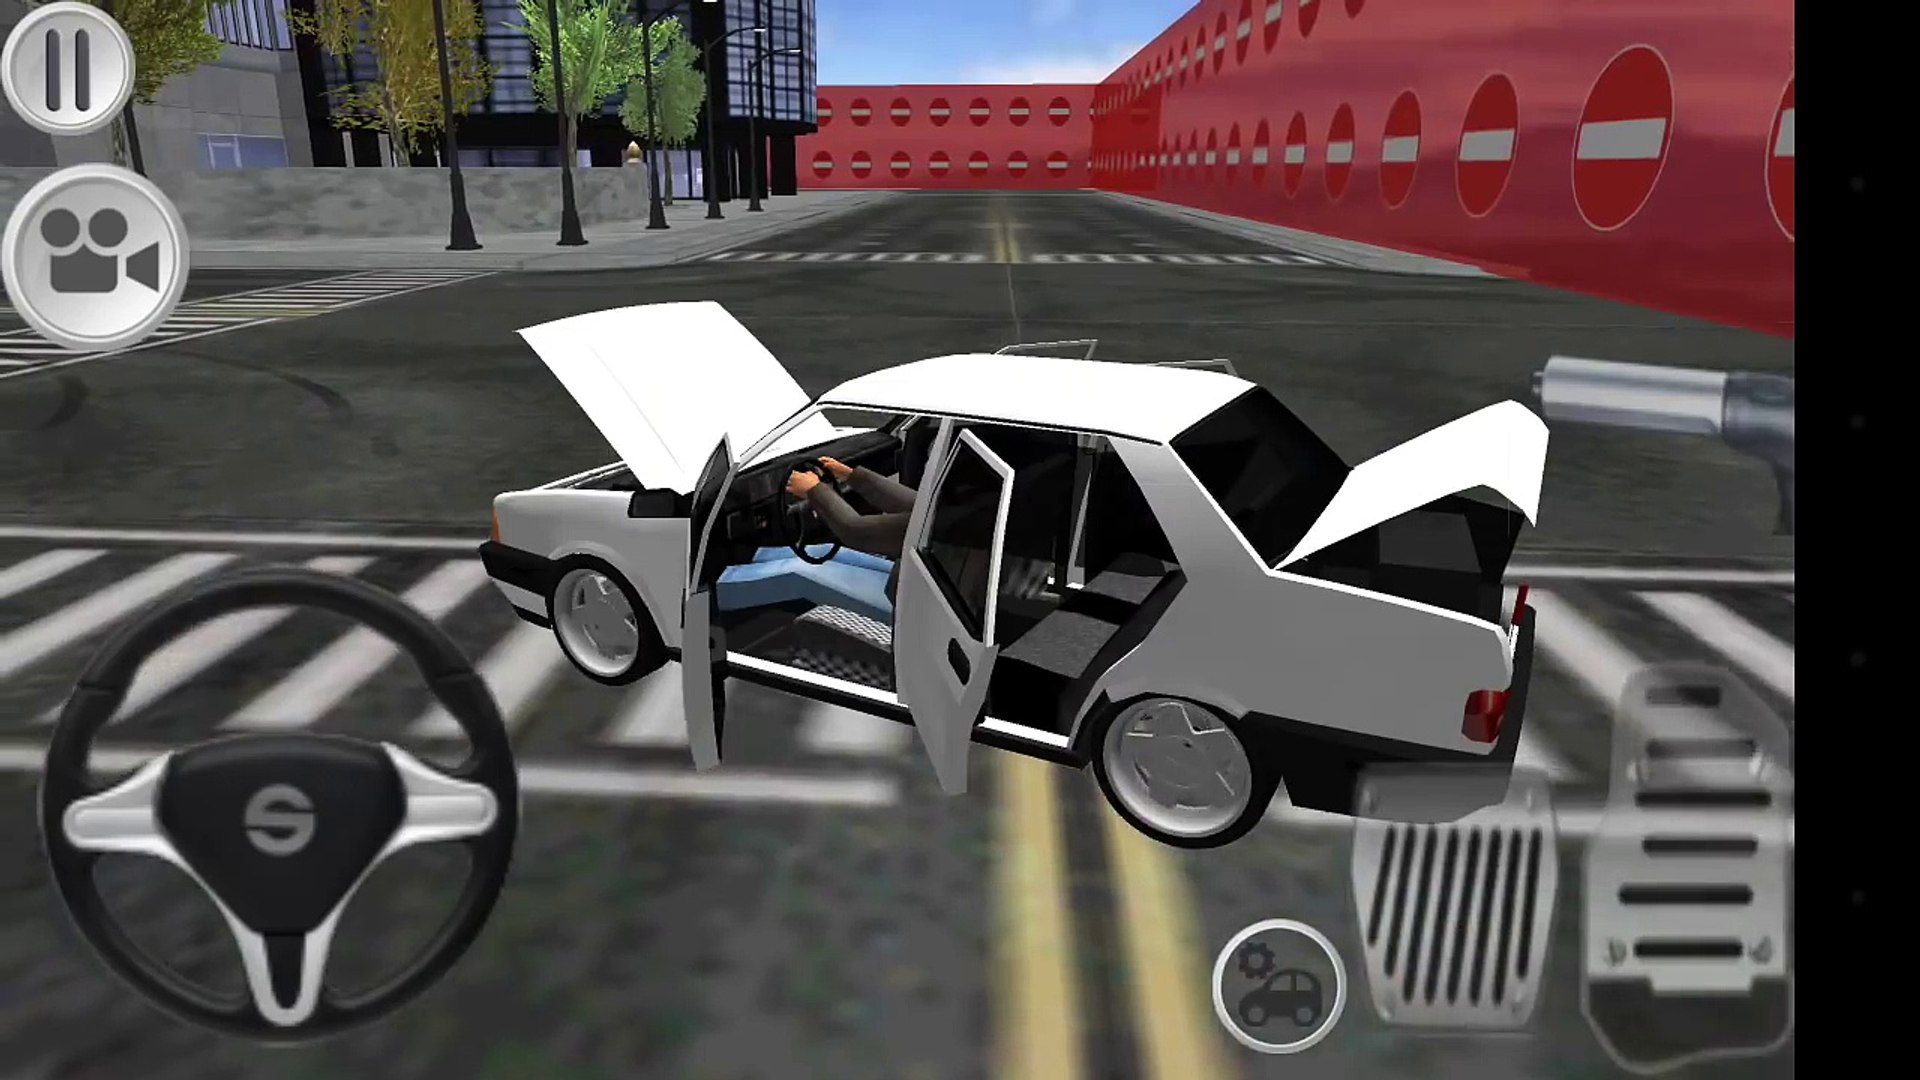 Araba Park Etme Oyunu | Doğan Driving Simulator #2 | Android Gameplay HD